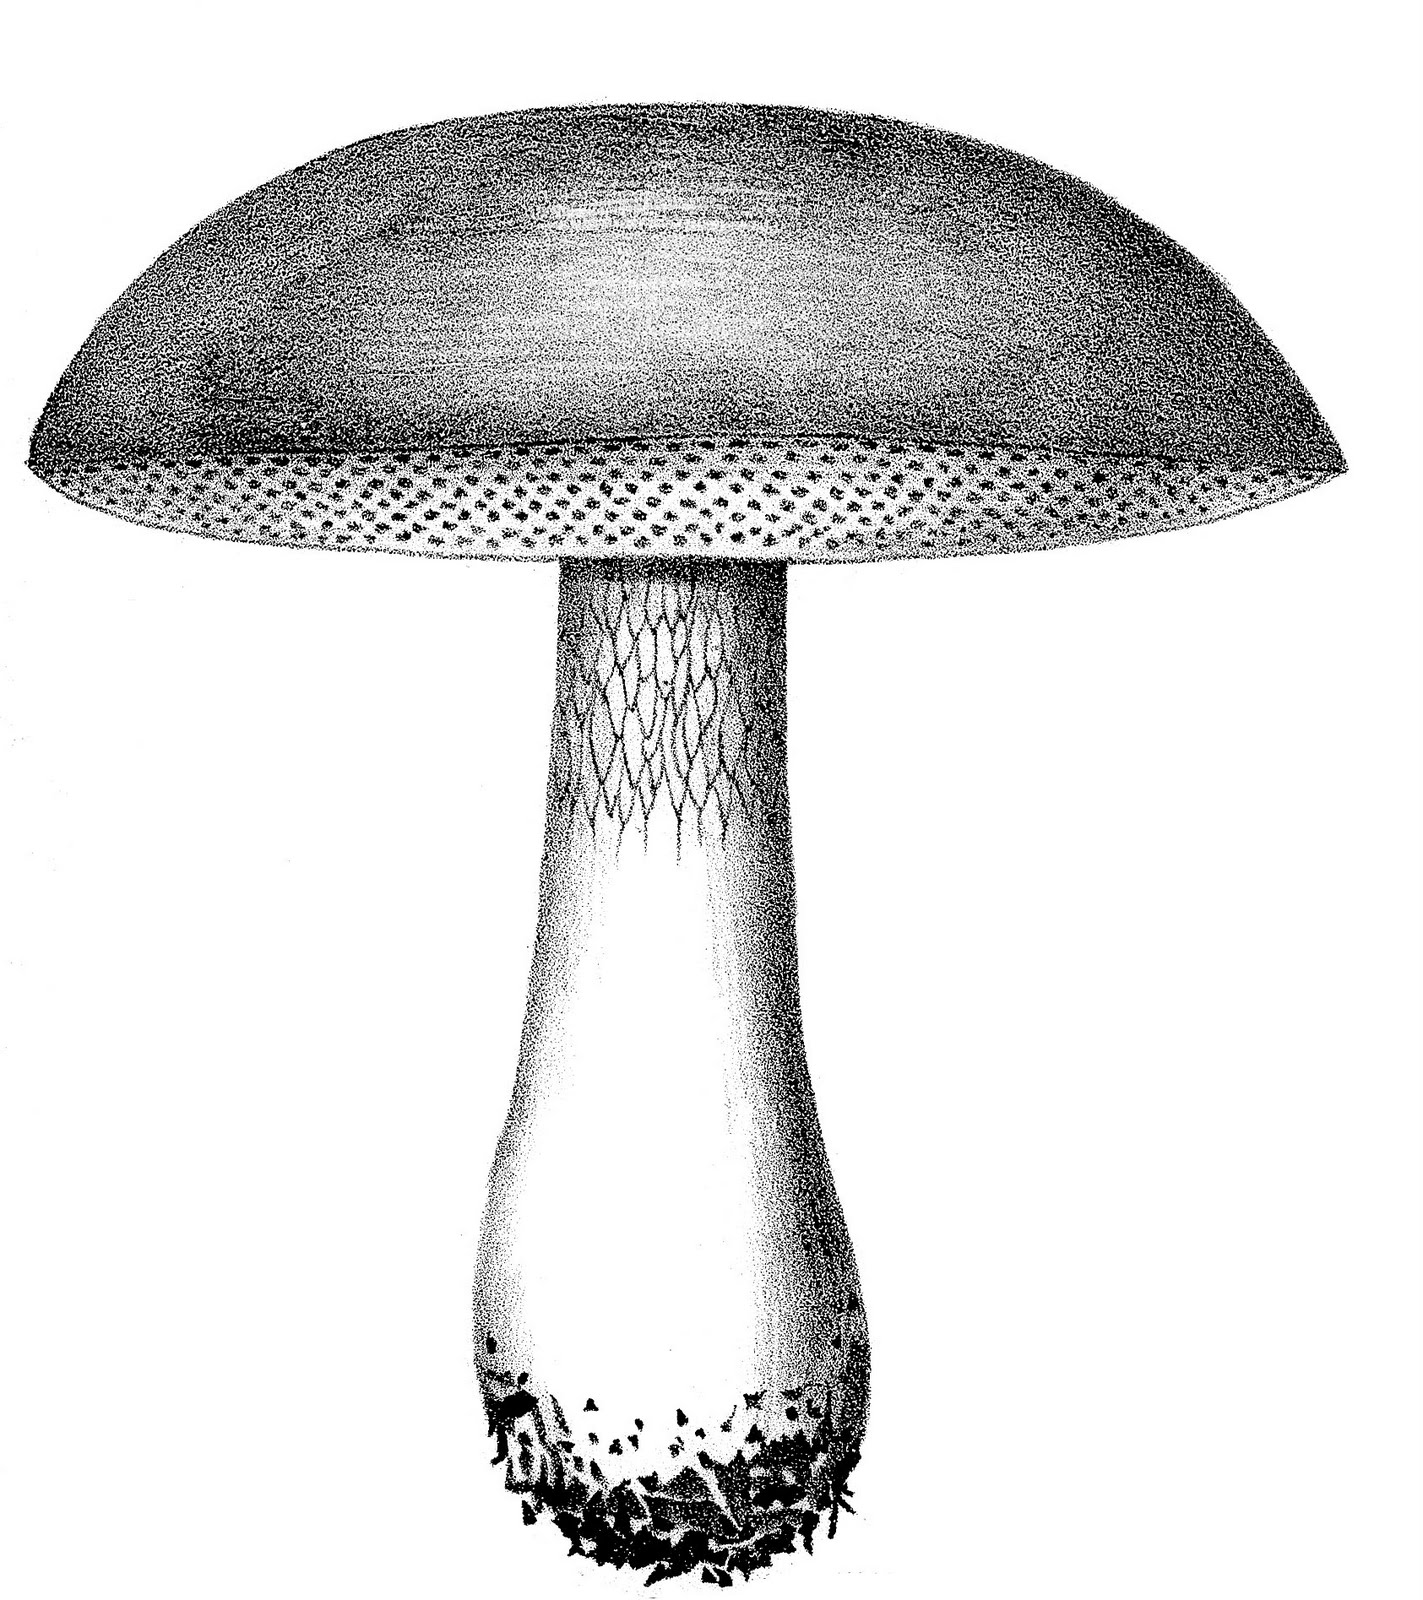 mushroom clipart black and white - photo #22